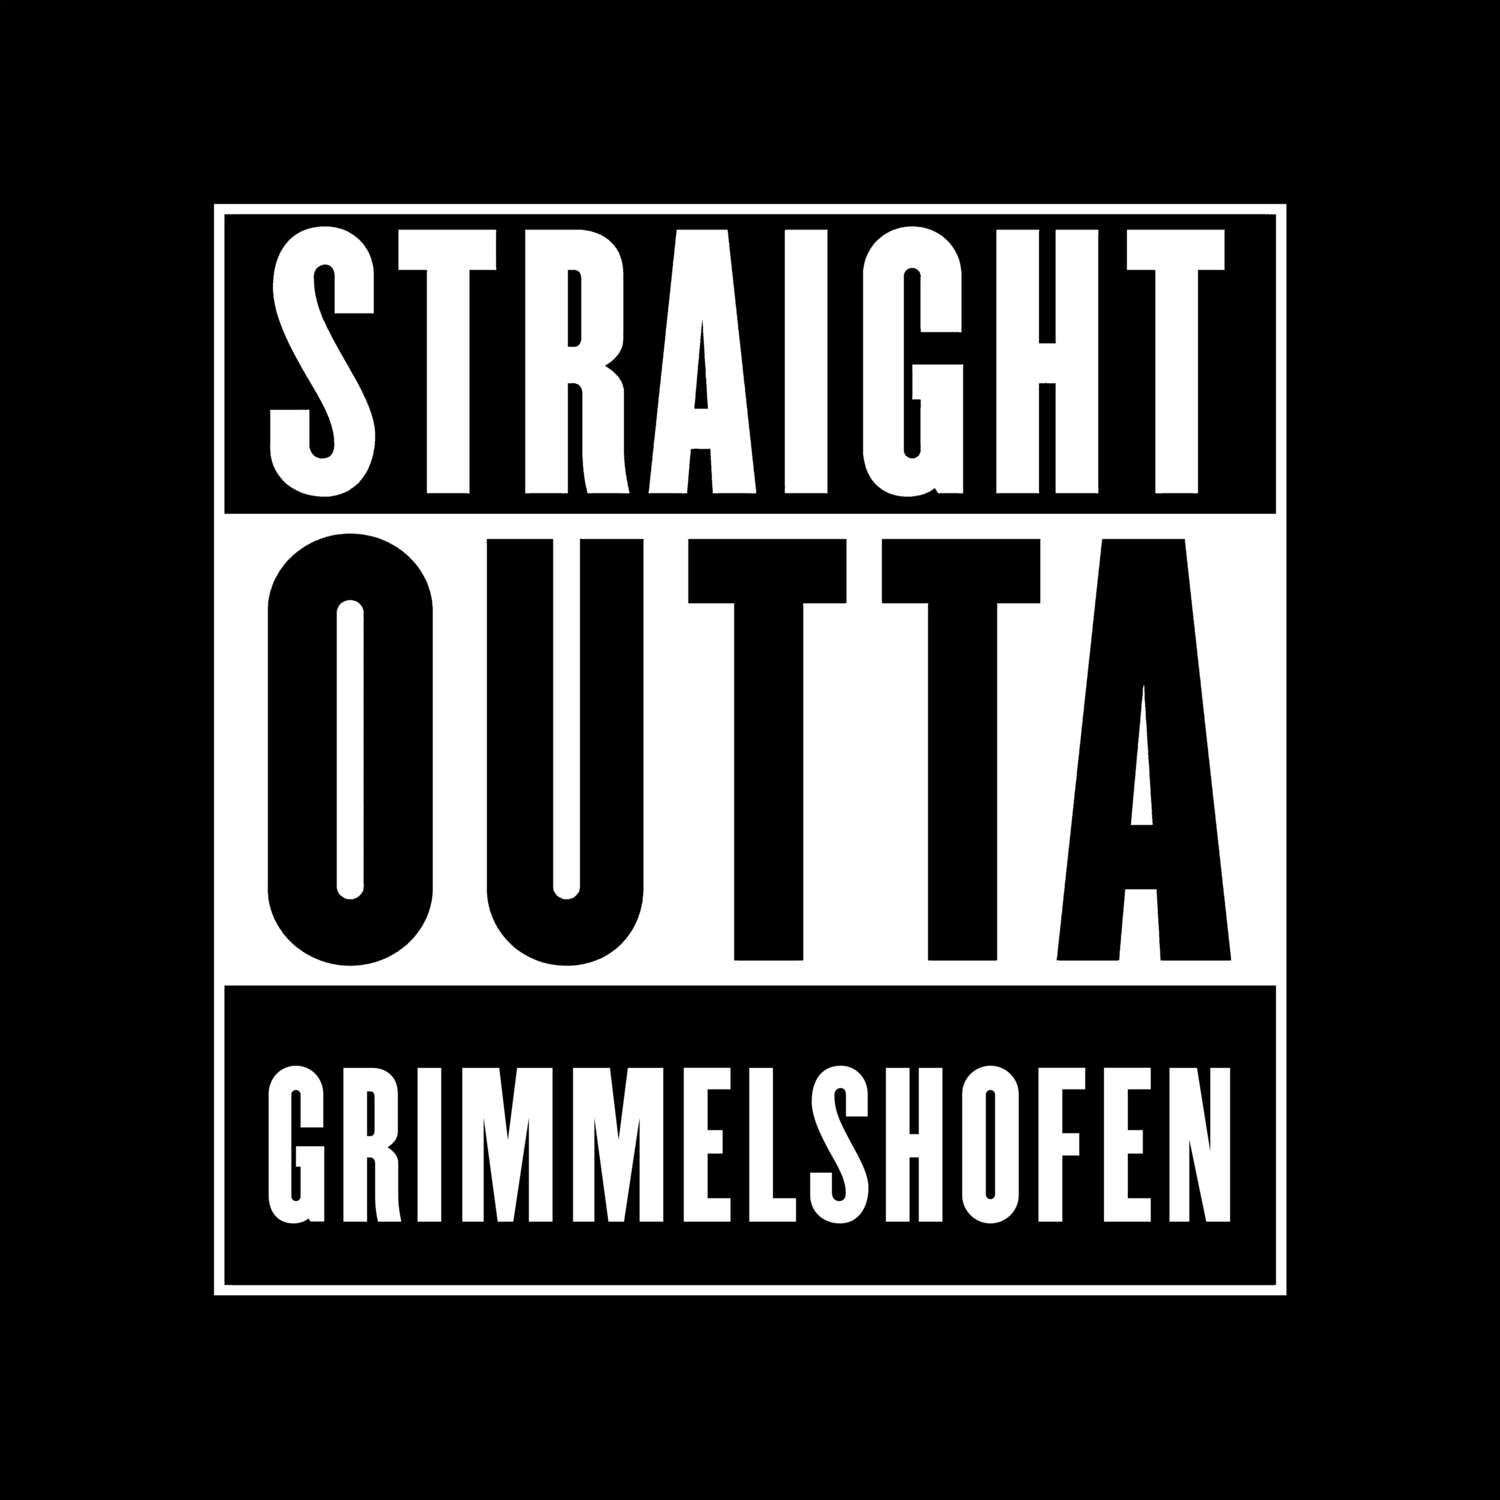 Grimmelshofen T-Shirt »Straight Outta«